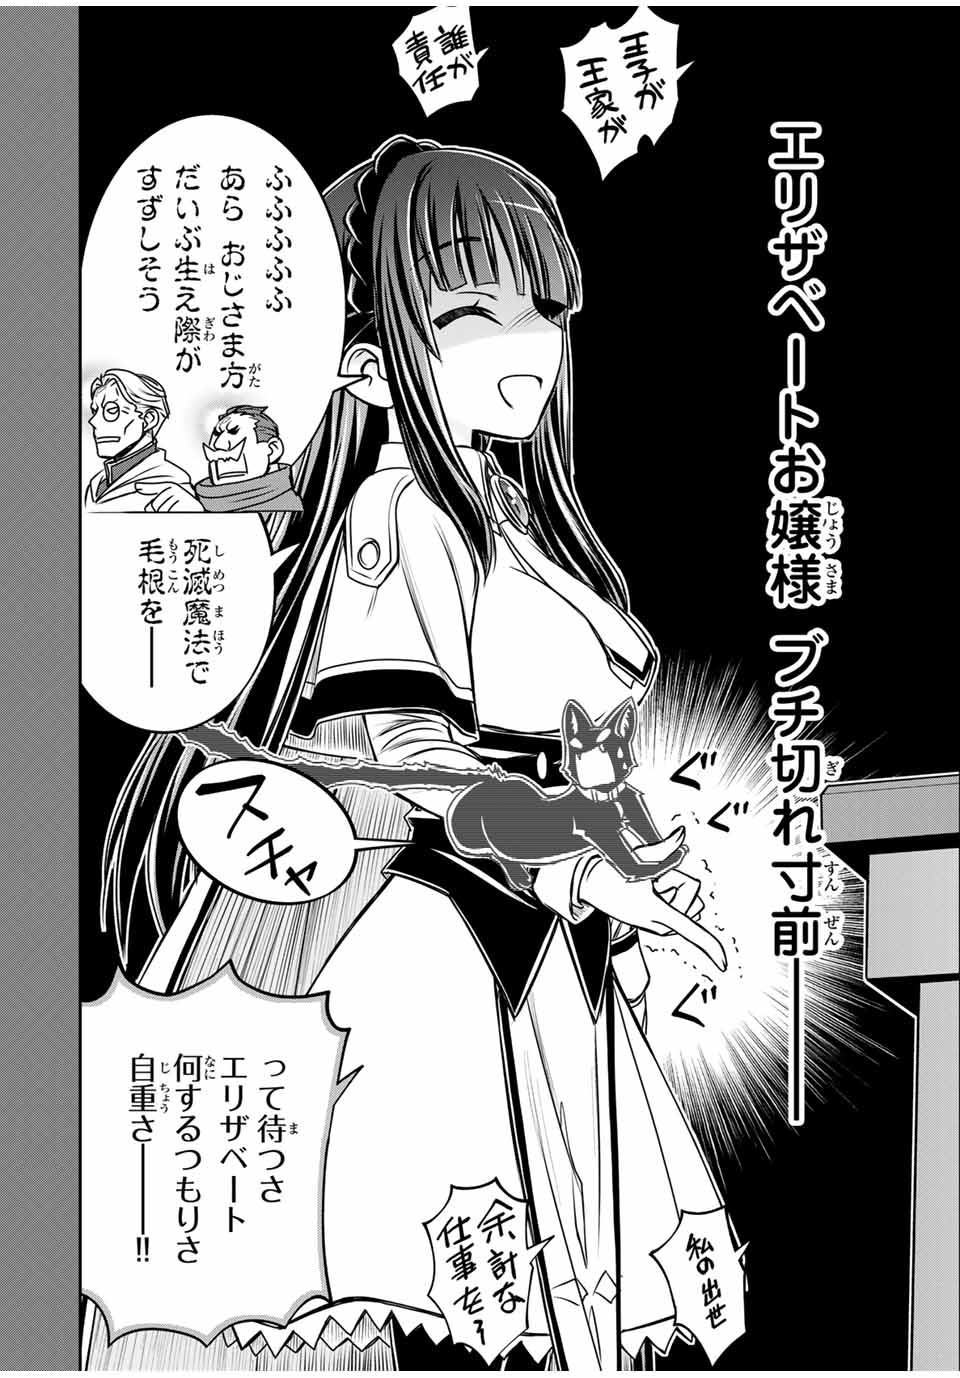 Nengan no Akuyaku Reijou (Last Boss) no Karada wo Teniiretazo!  - Chapter 18 - Page 2